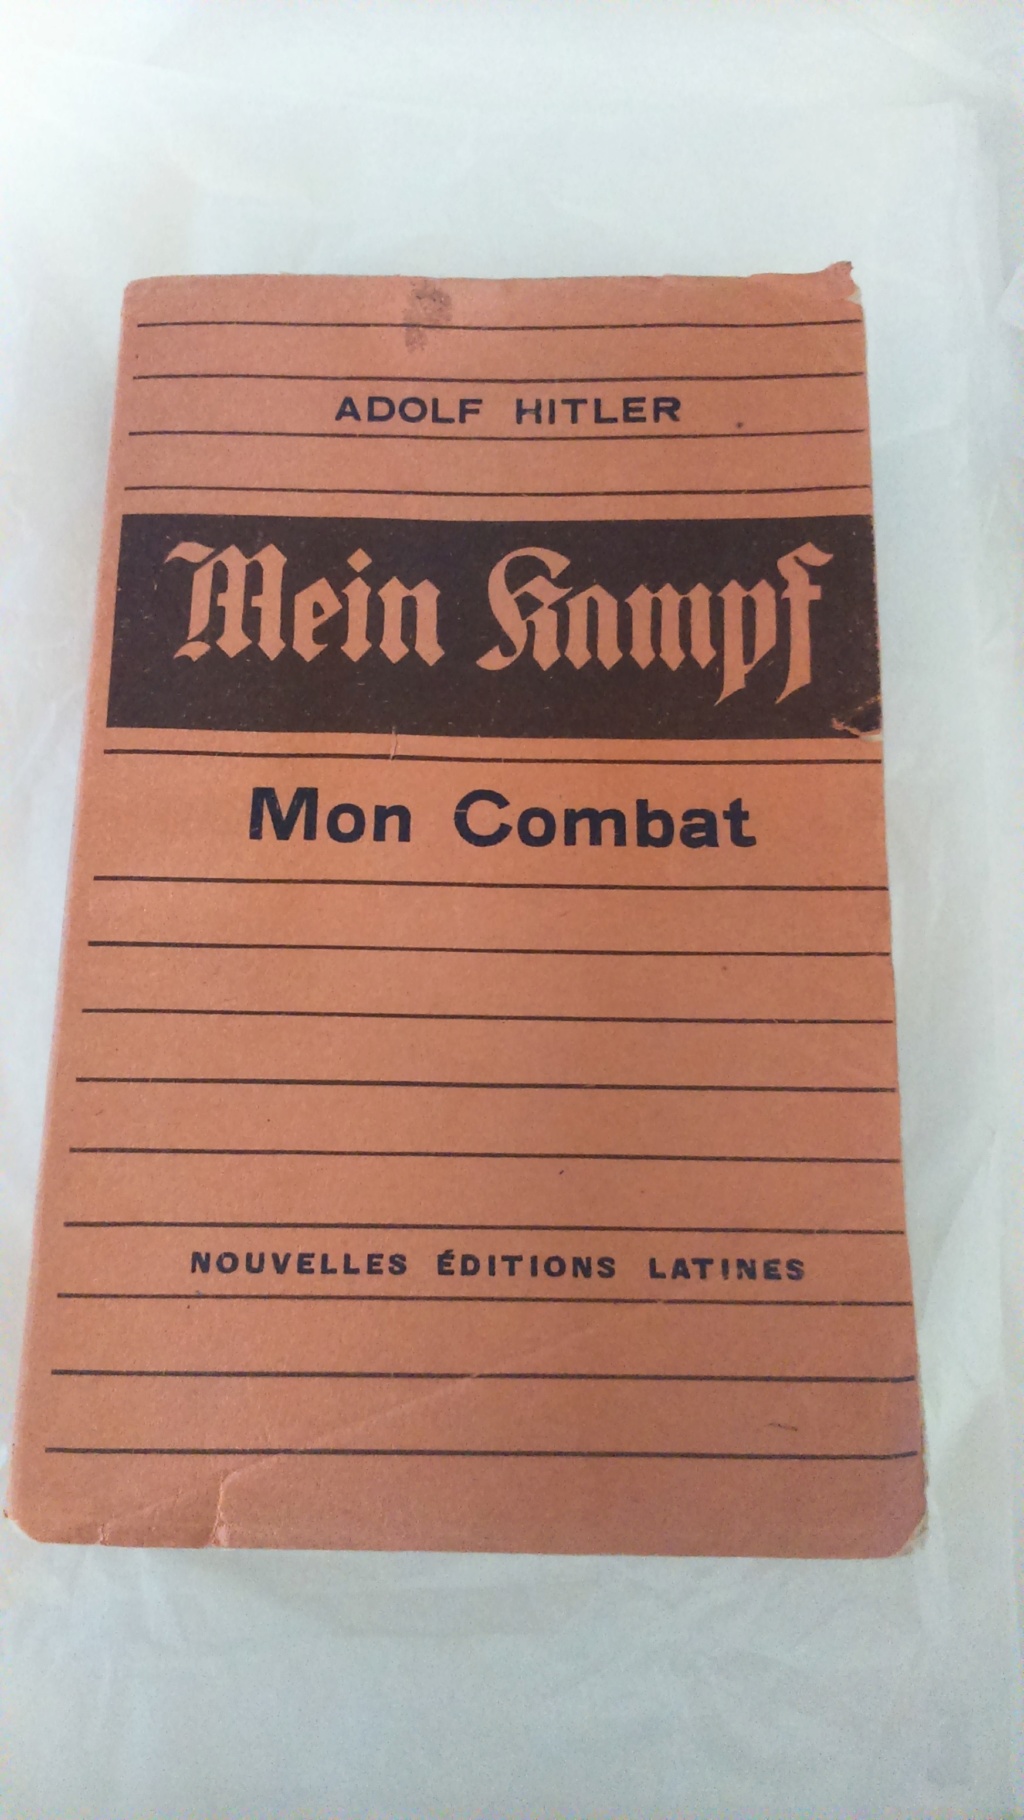 Mein Kampf  editions latines 1934   Dsc_0444